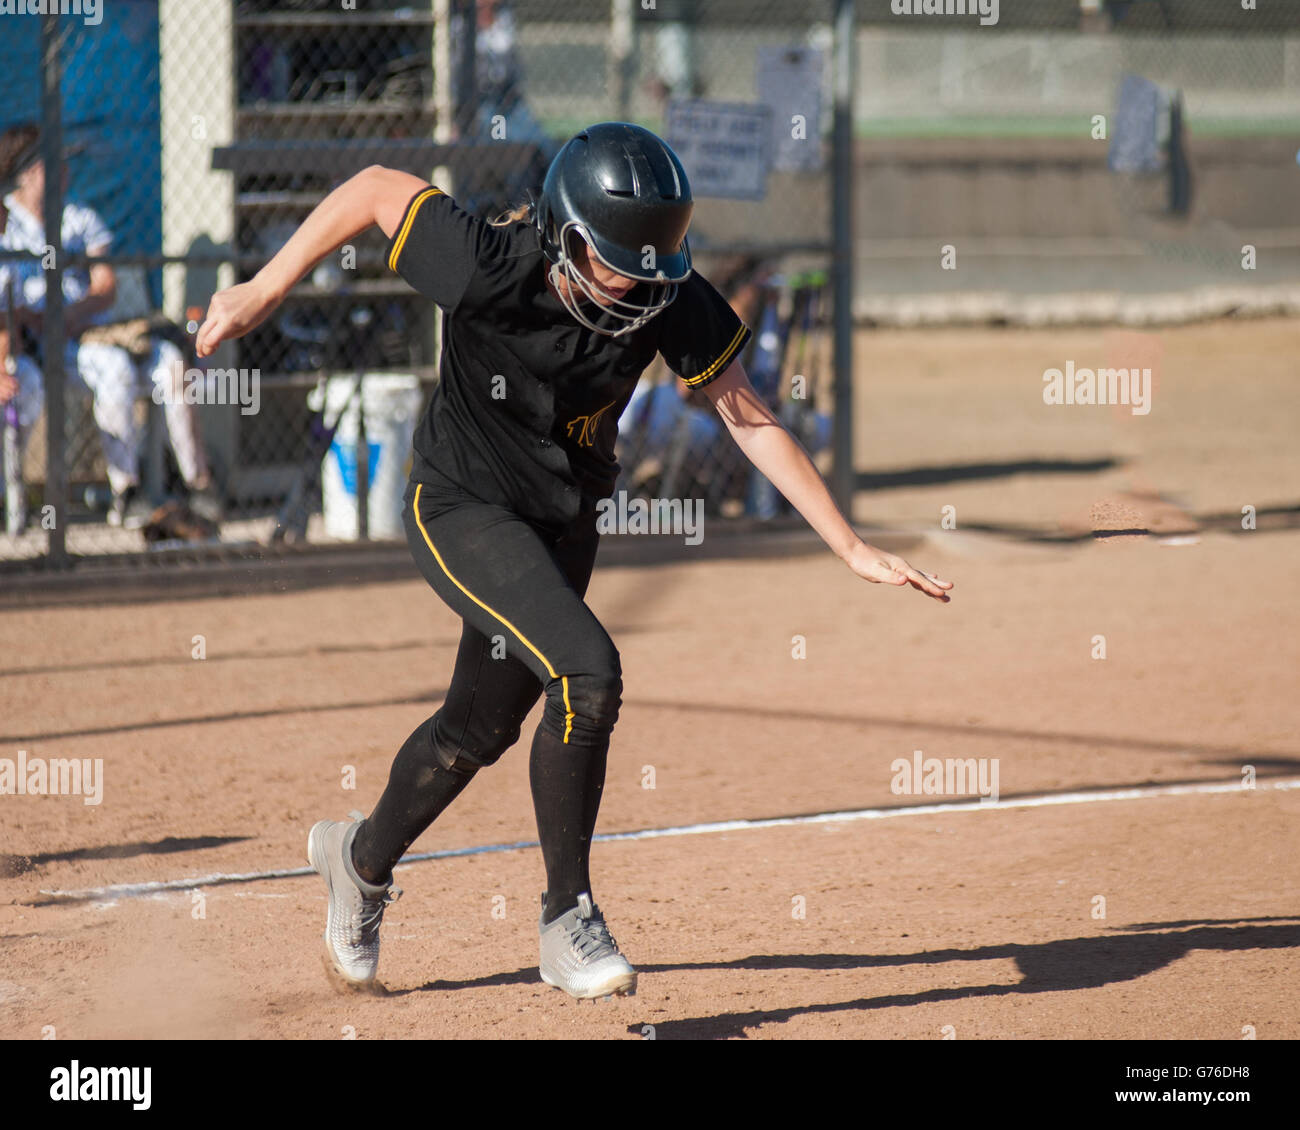 de softbol en uniforme negro esprintar a primera base Fotografía stock Alamy